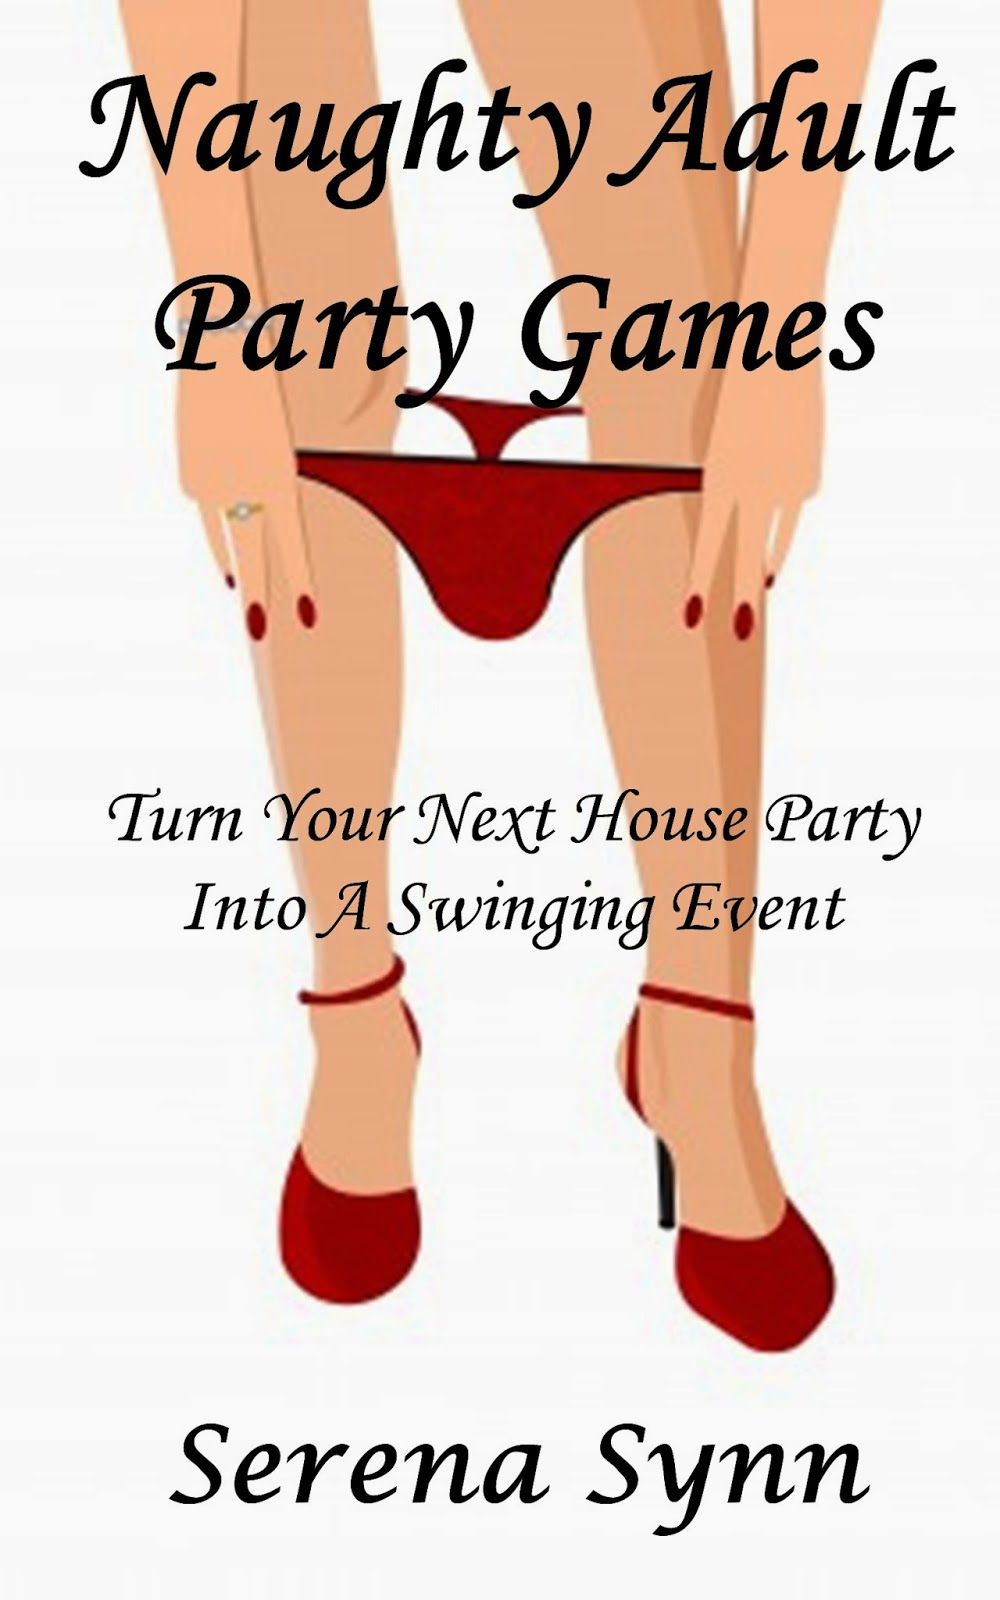 games for swingers swinger party games swinger sex games were swinging